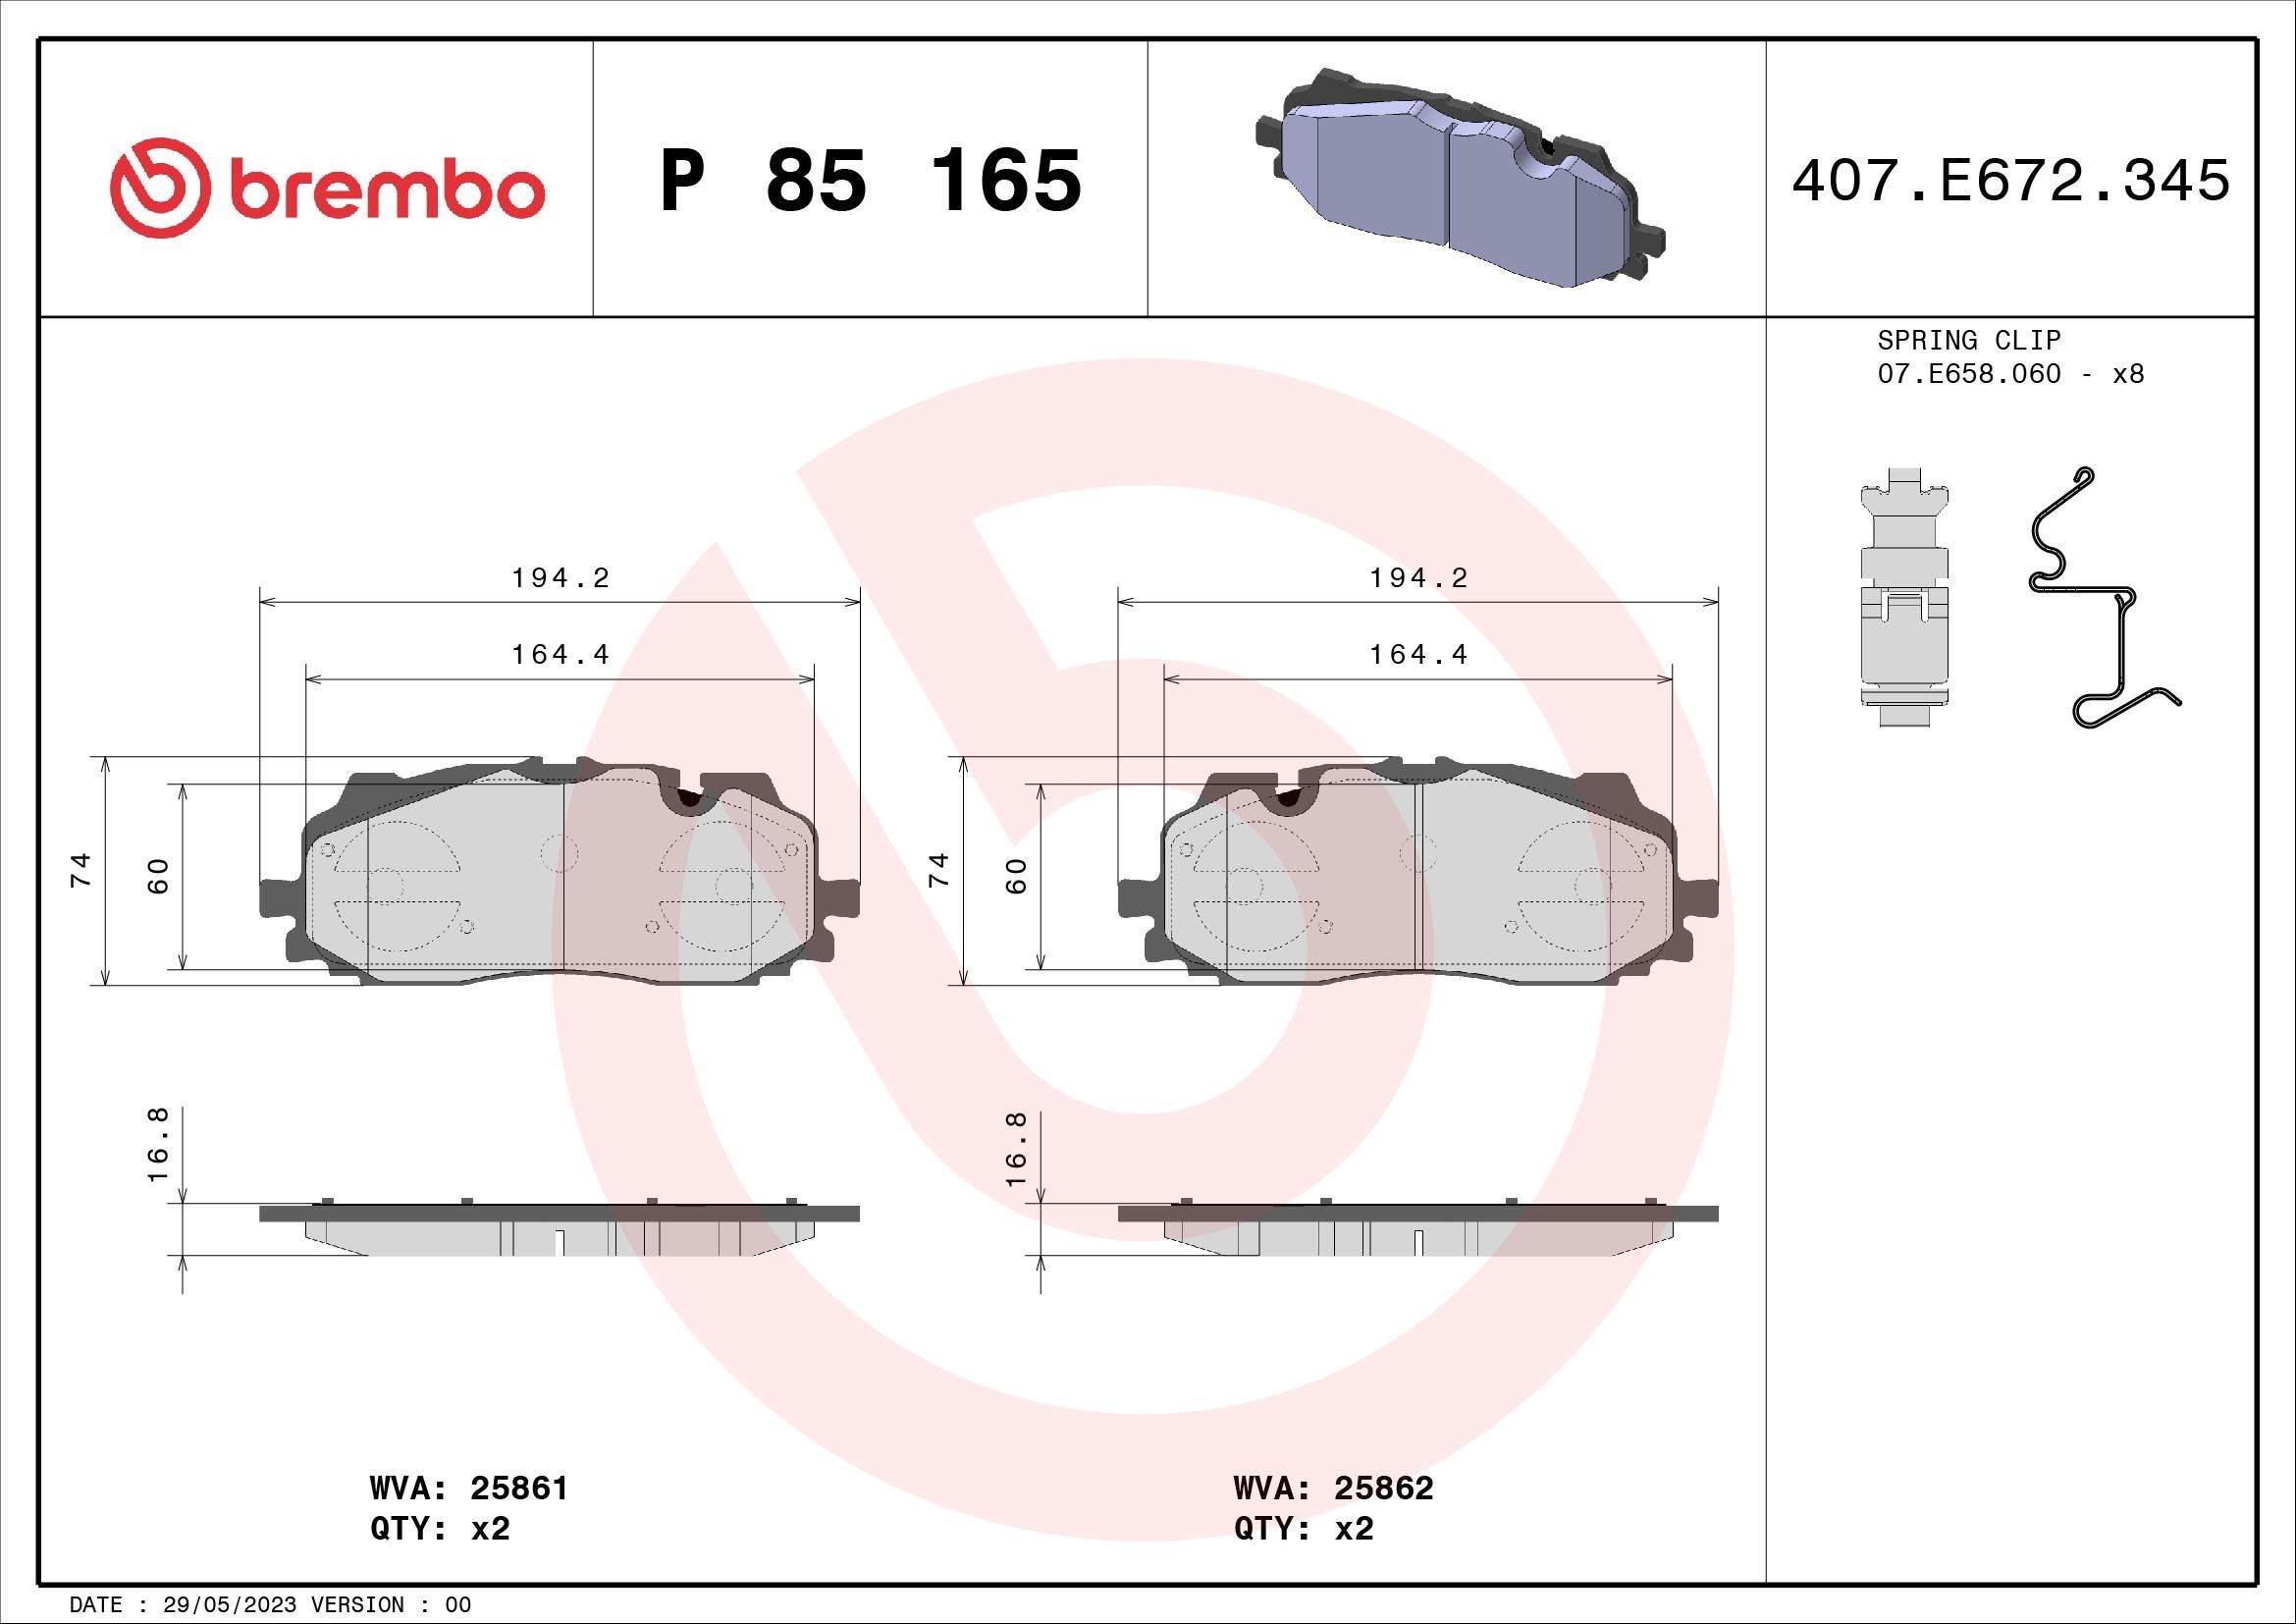 Brake pad set P 85 165 from BREMBO